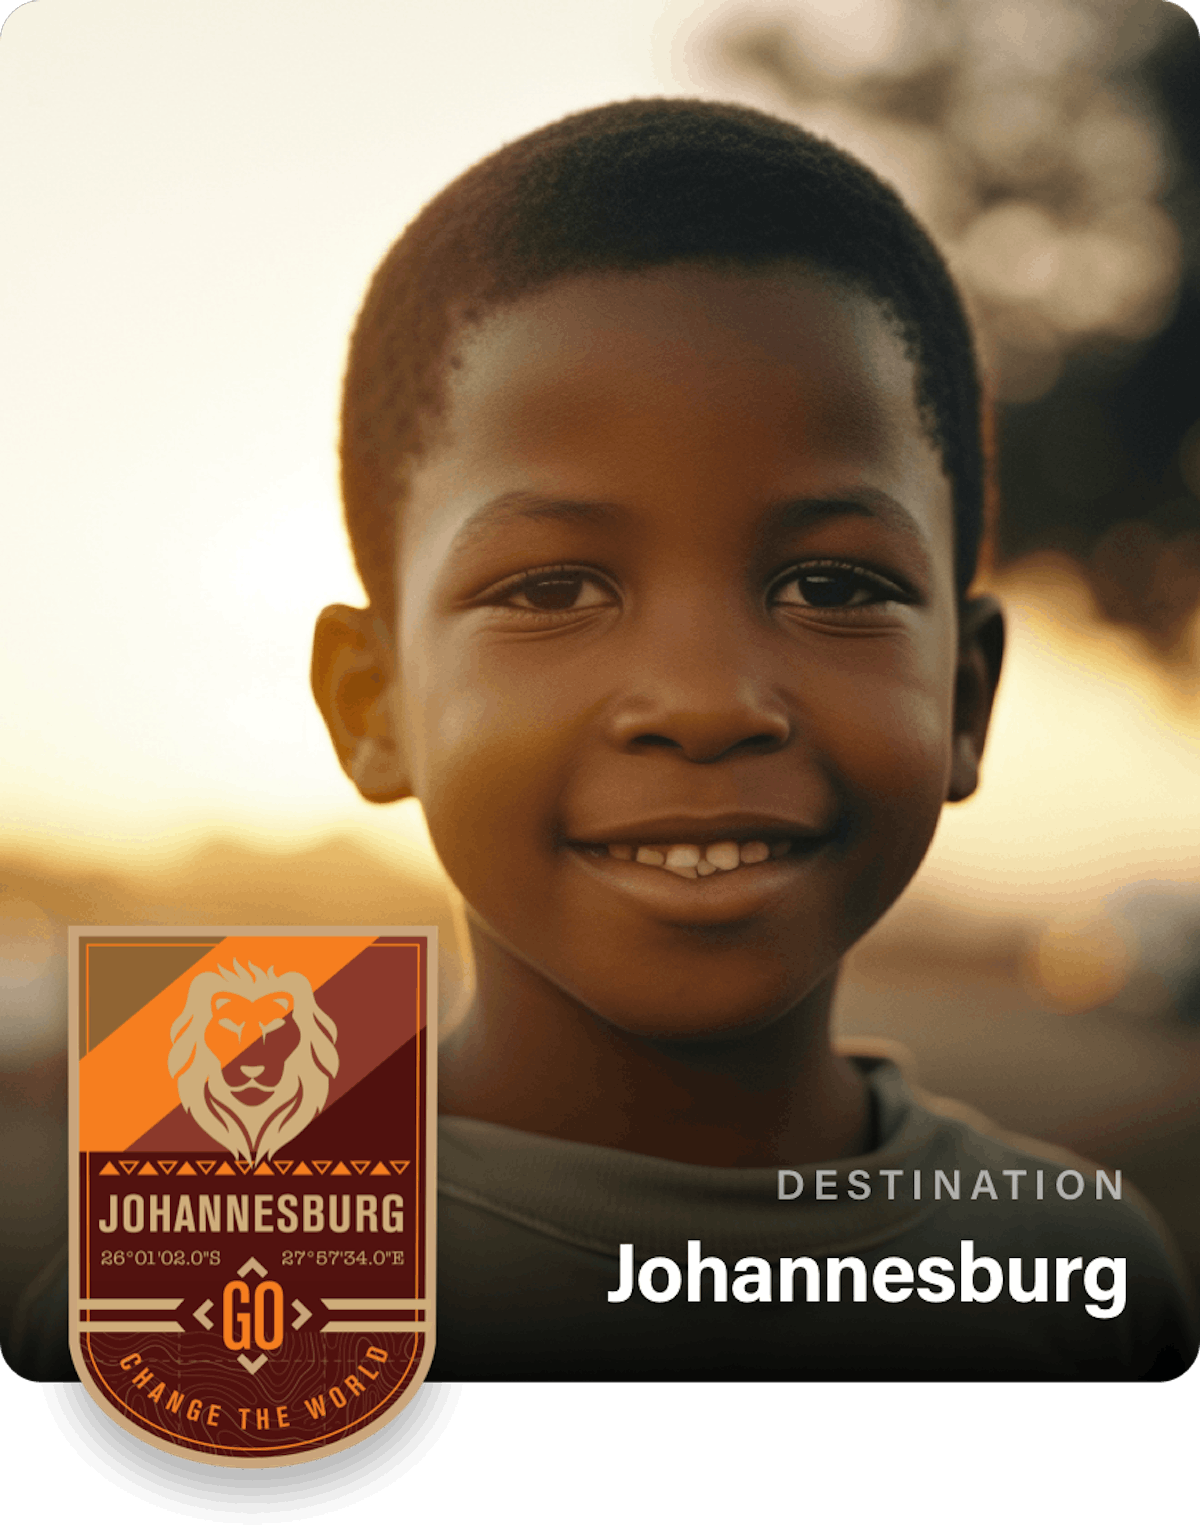 image of johannesburg destination card